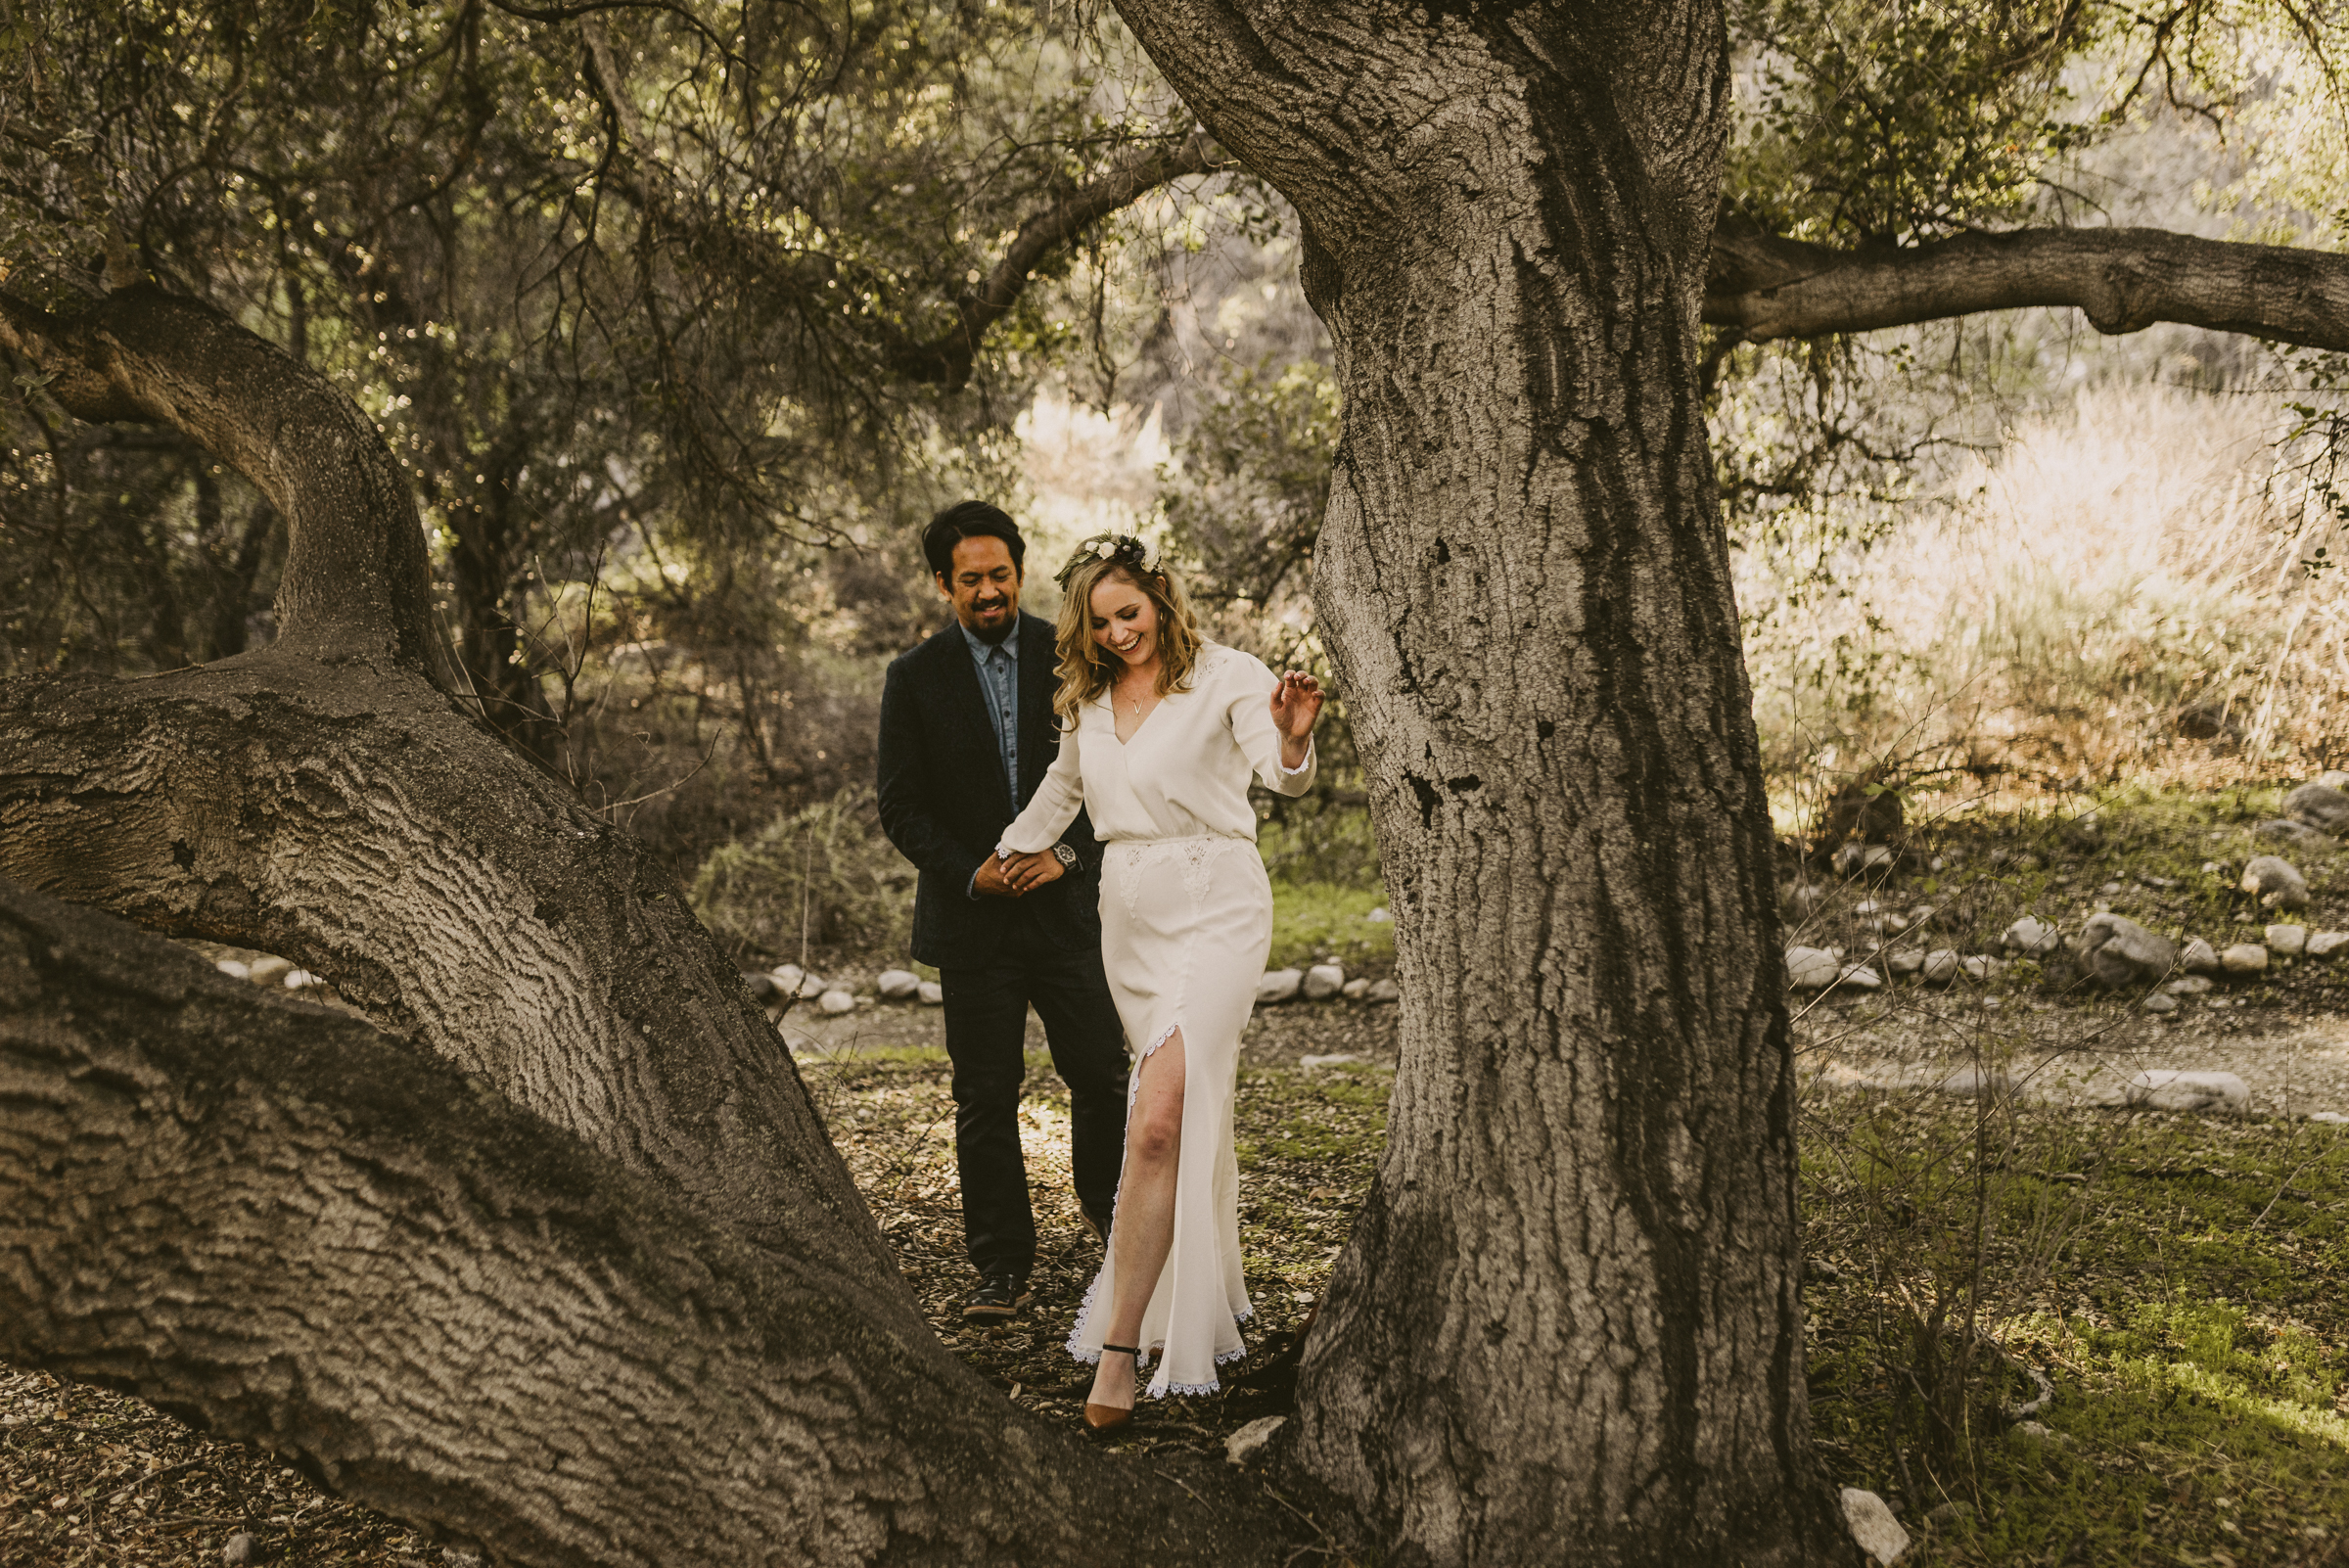 ©Isaiah + Taylor Photography - Intimate Elopement, Eaton Canyon, Los Angeles Wedding Photographer-21.jpg